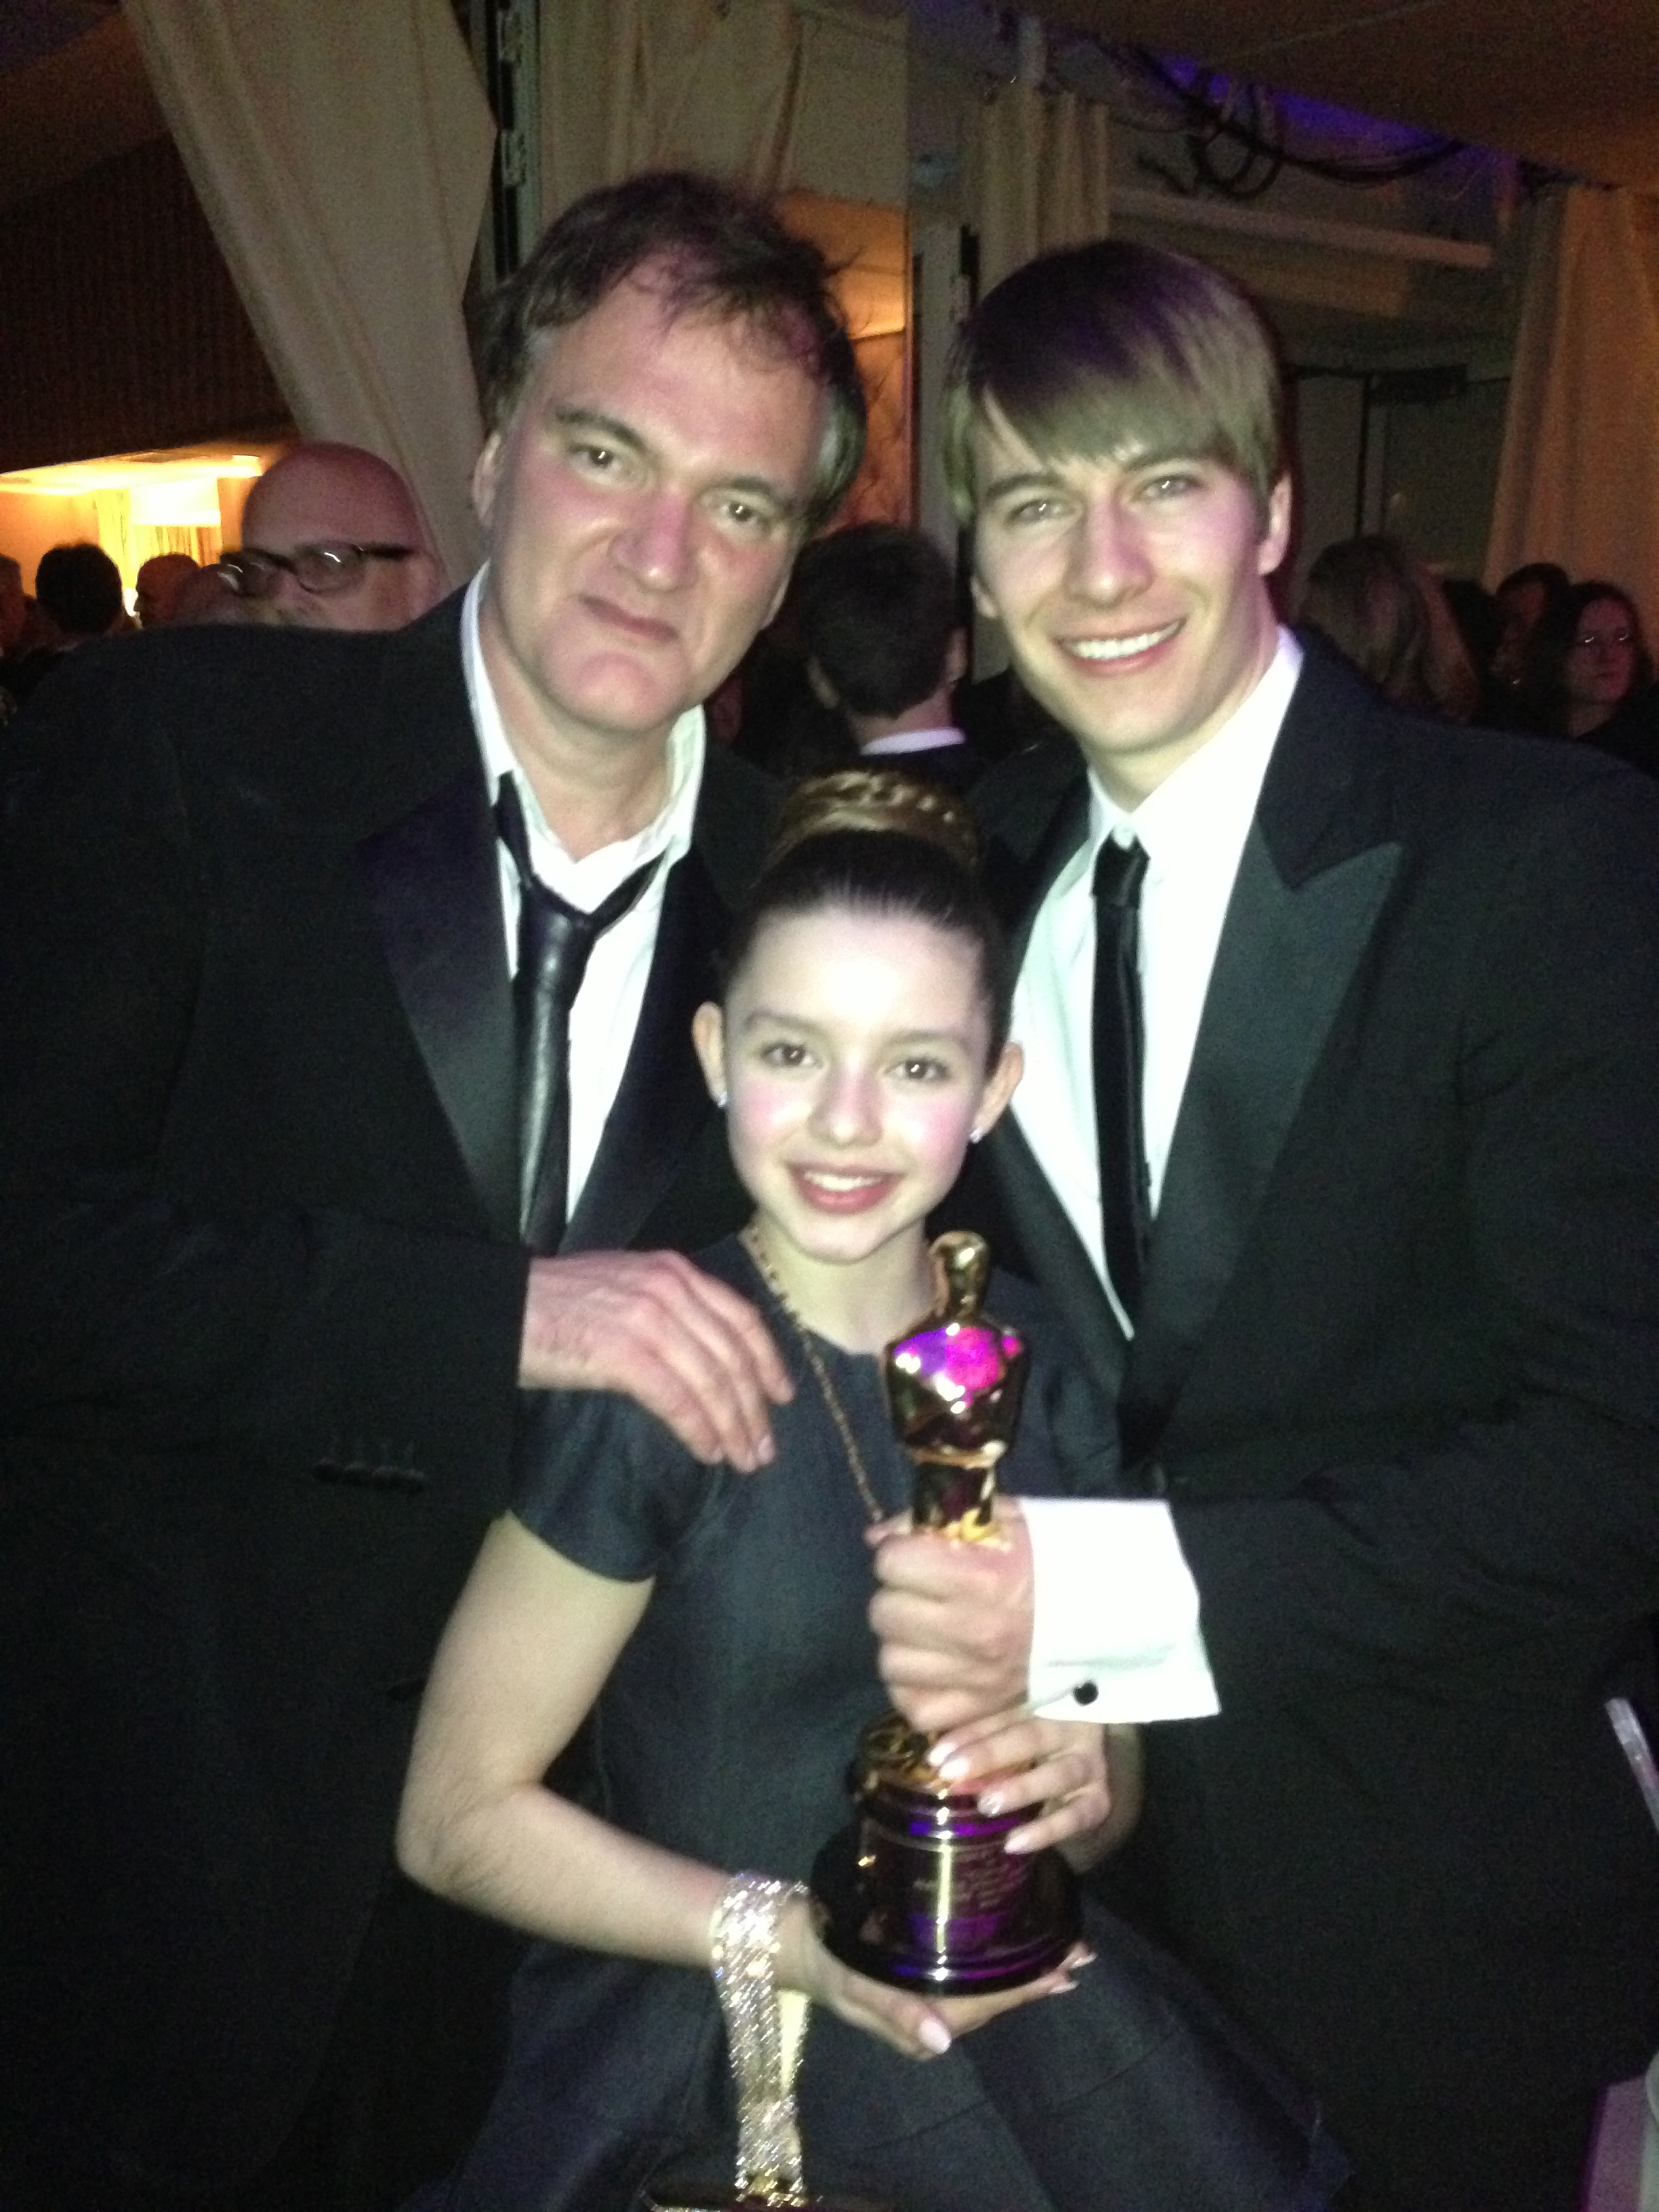 Quentin Tarantino, Fatima Ptacek, and Andrew Napier at the 2013 Vanity Fair Oscar Party.